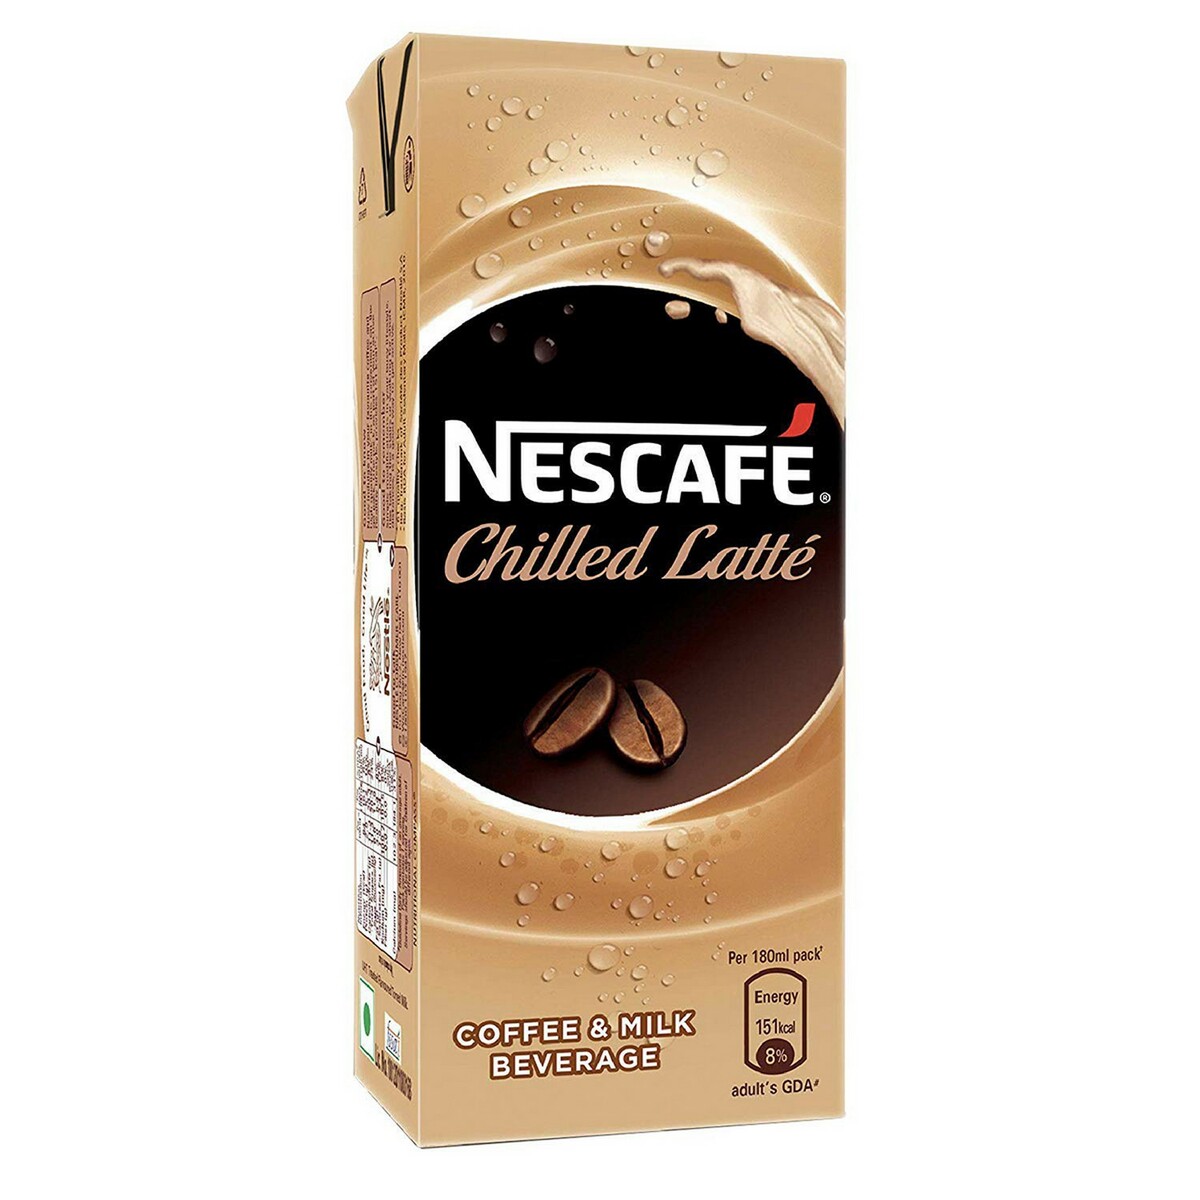 Nescafe RTD Latte 180ml